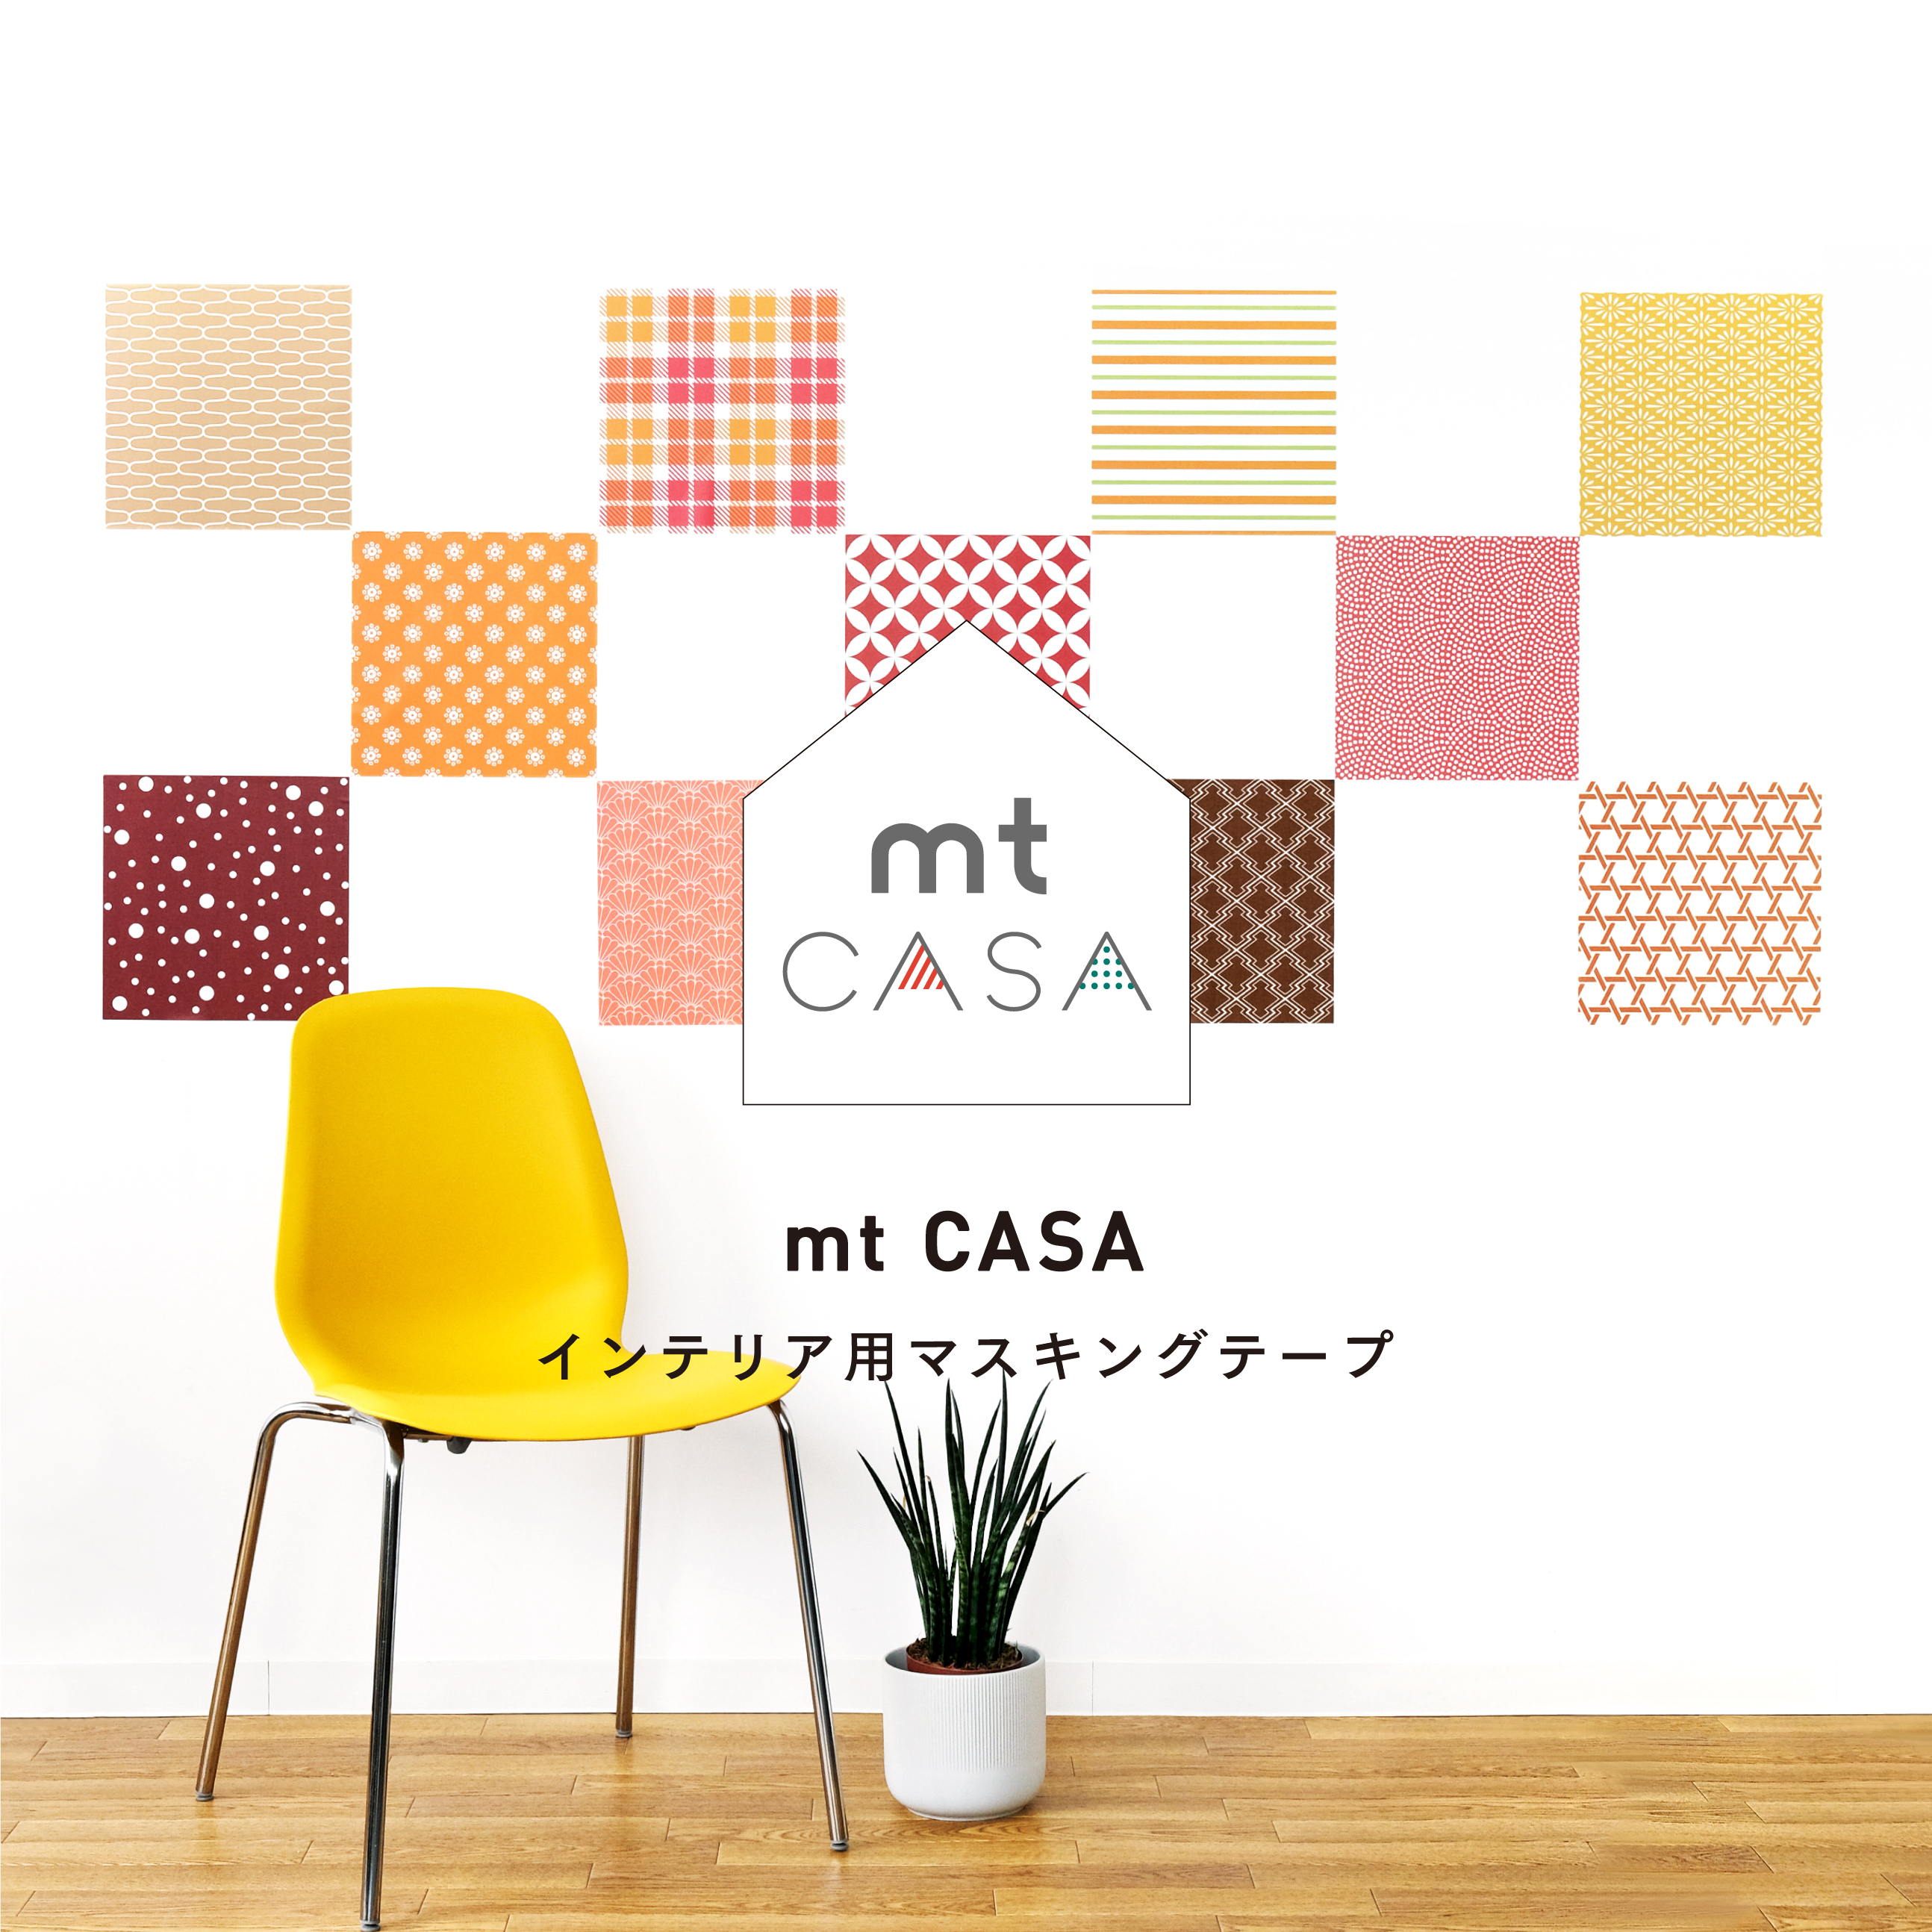 mt CASA マスキングテープ「mt」- masking tape